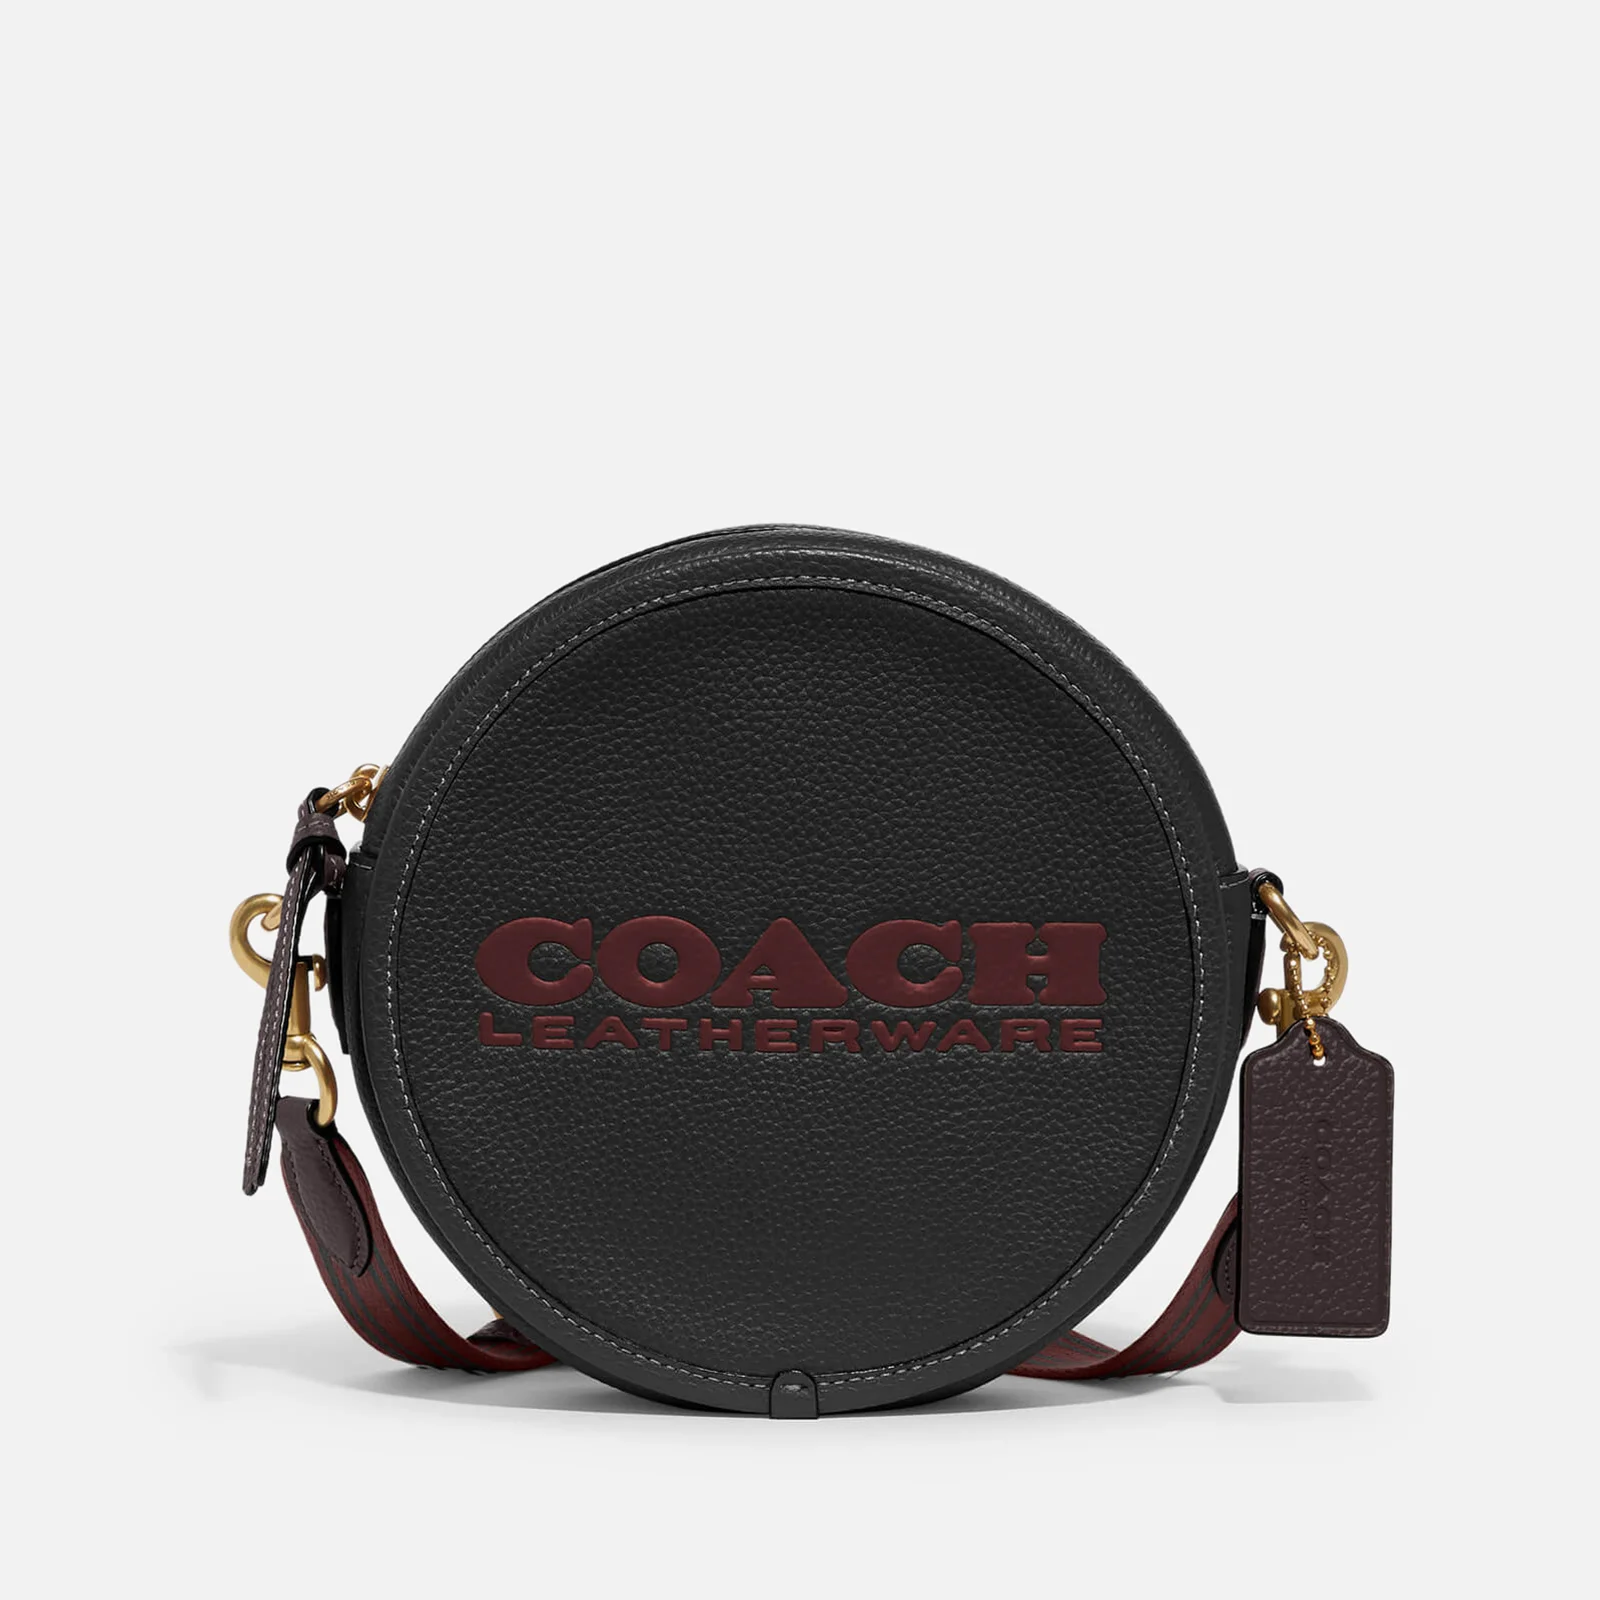 Coach Women's Colorblock Leather Kia Circle Bag - Black Multi Image 1